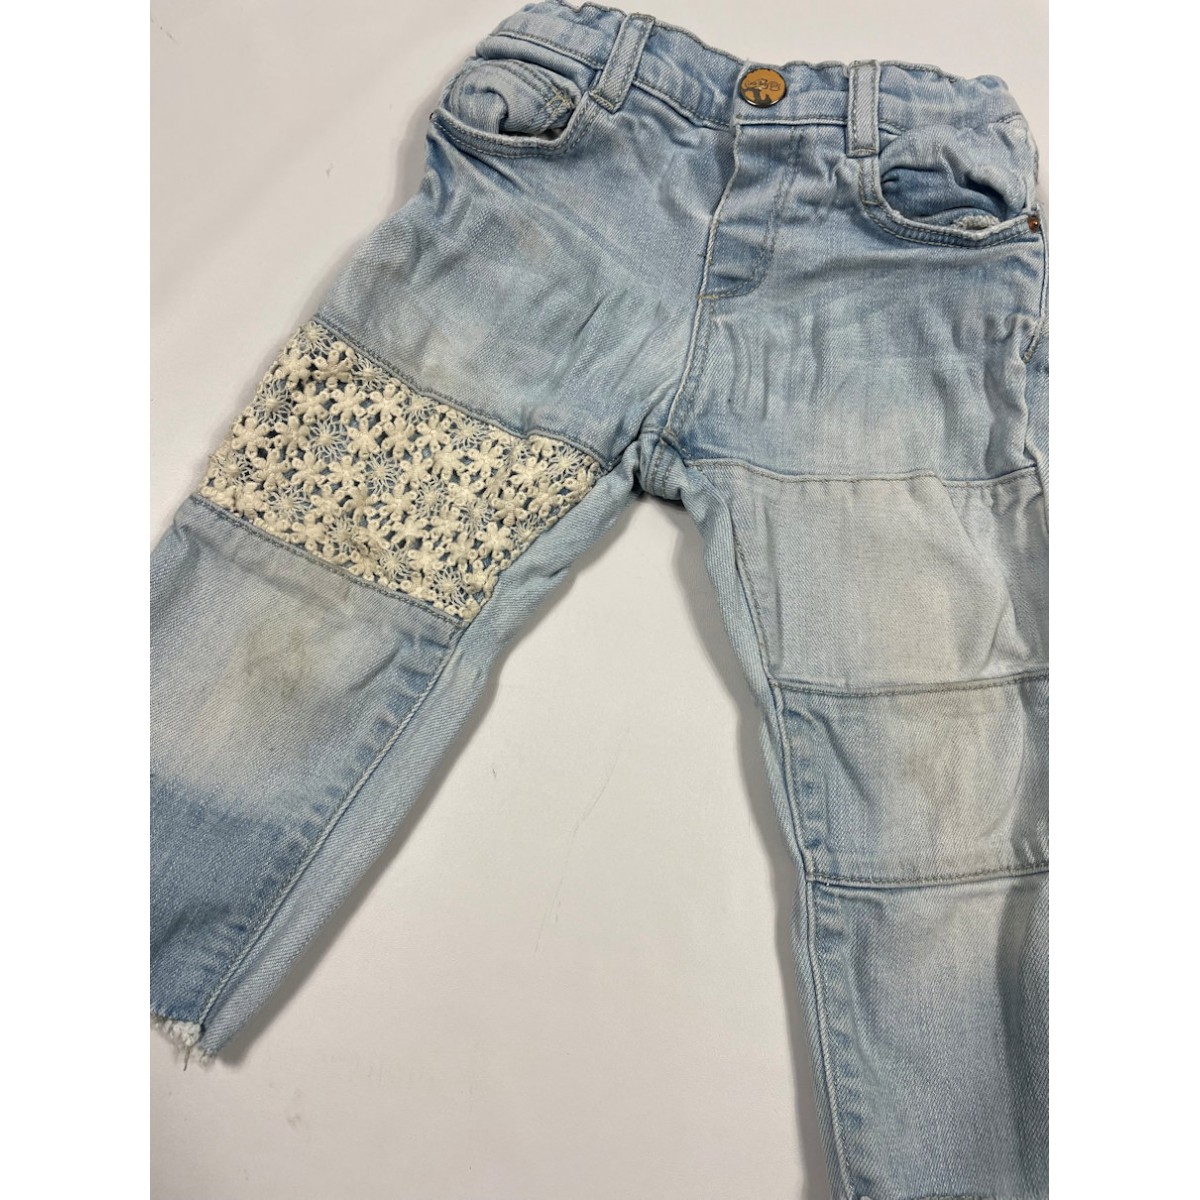 jeans Zara / 12-18 mois